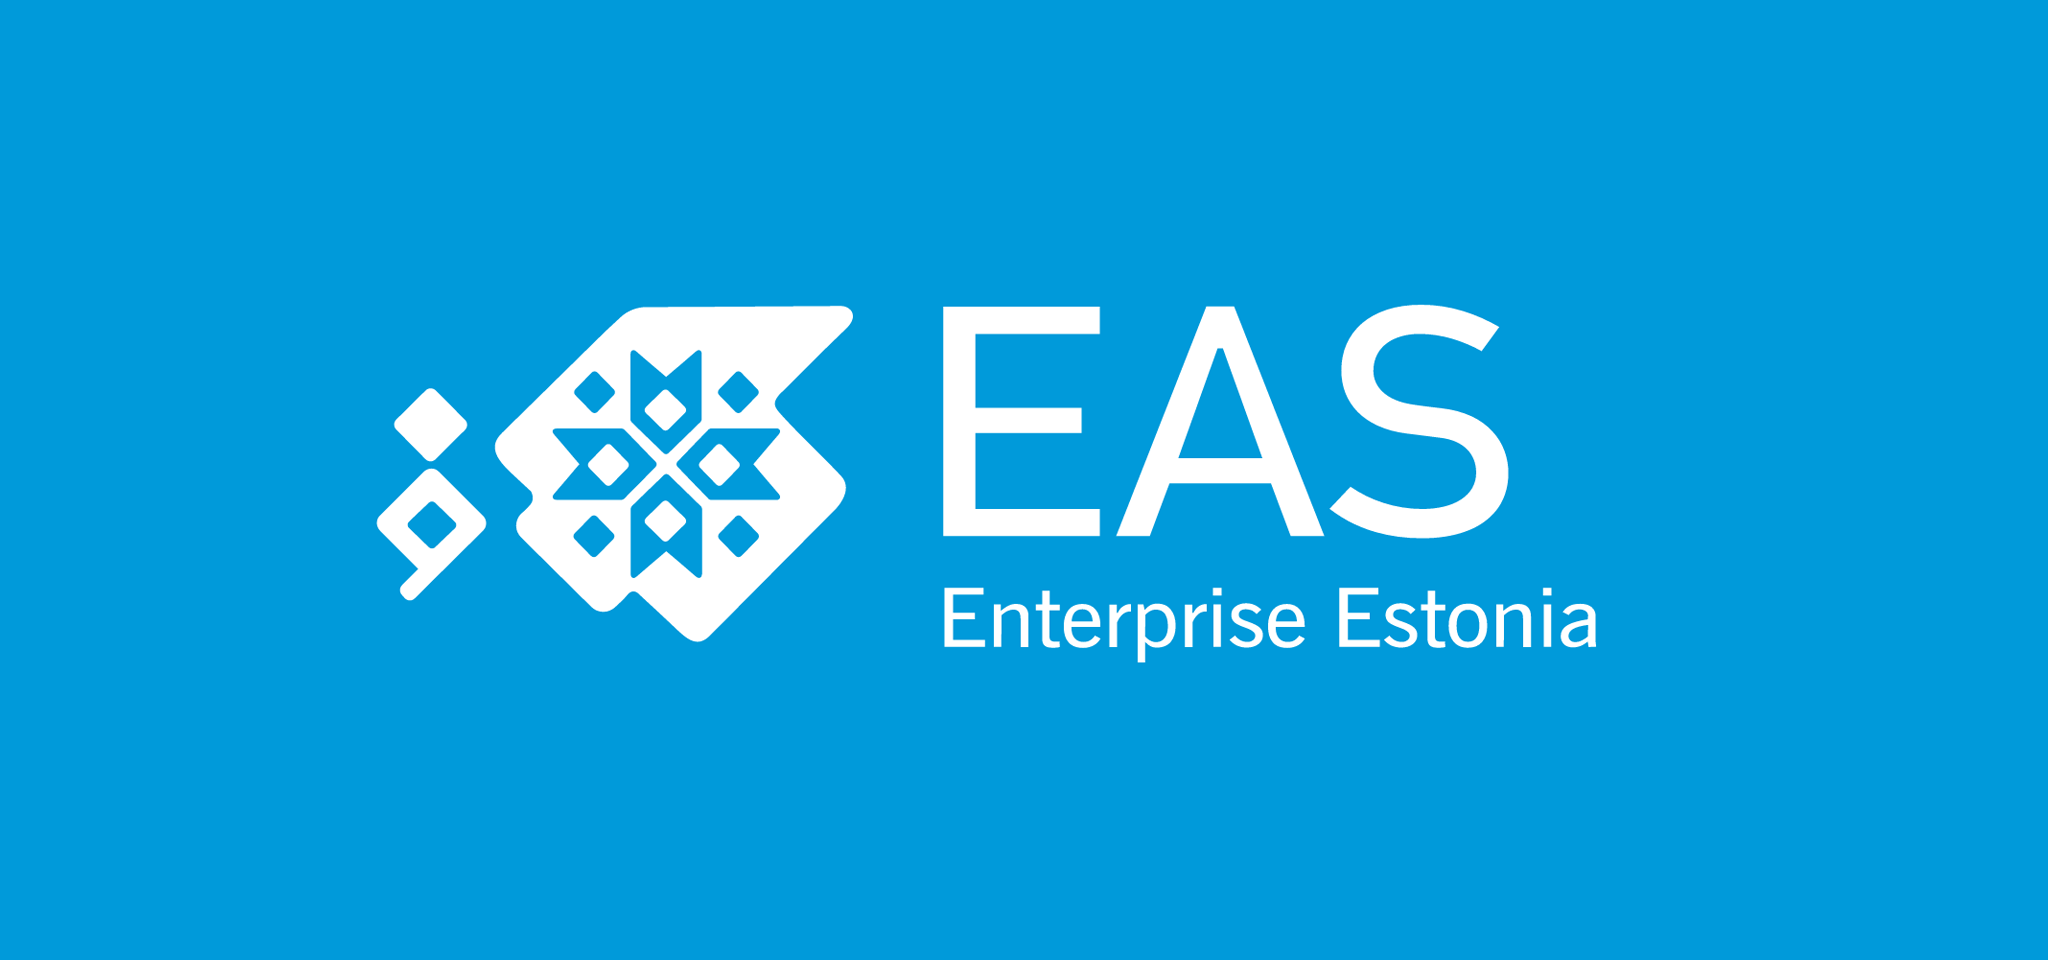 estonian travel and tourism association (etf)